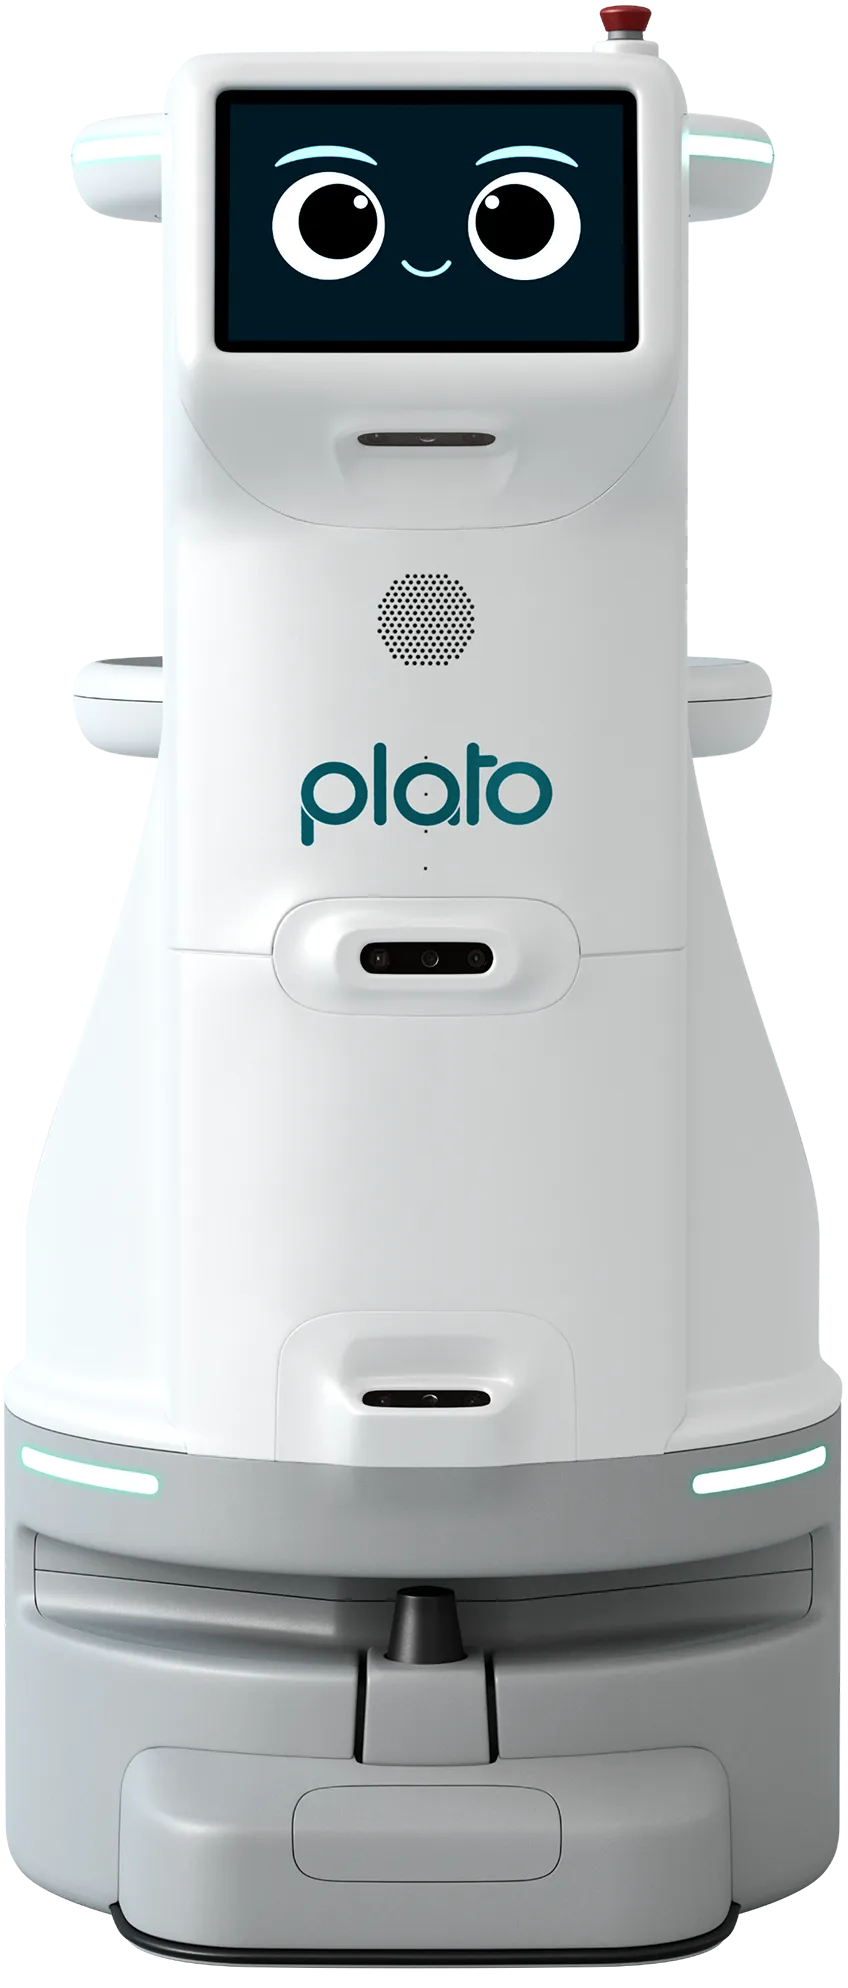 PLATO robot - Front side